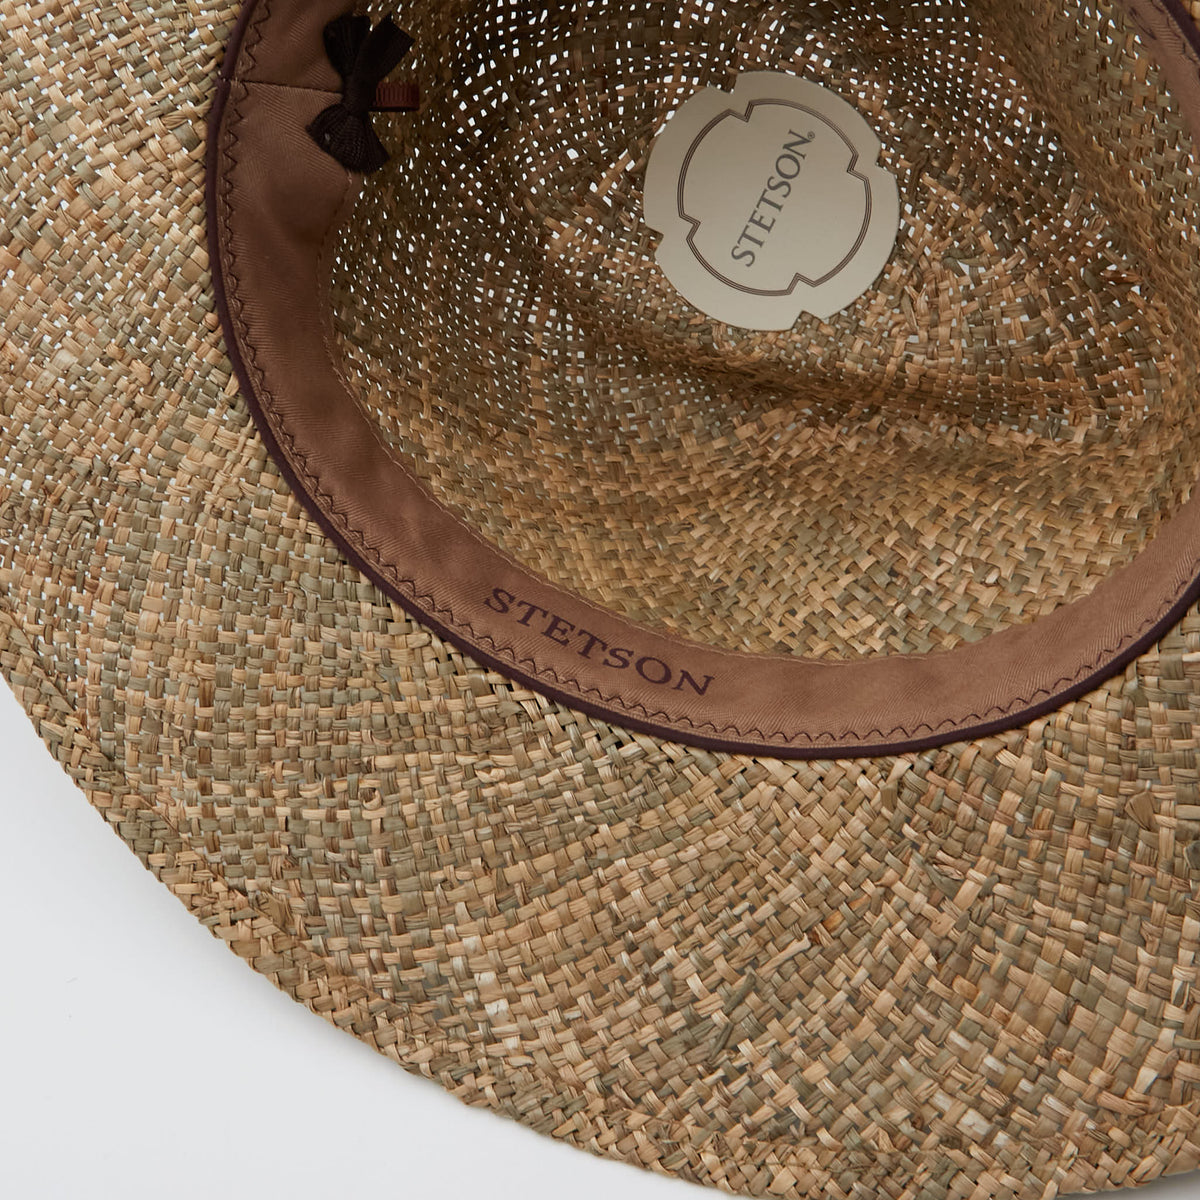 Stetson Traveller SeagrassStraw Hat